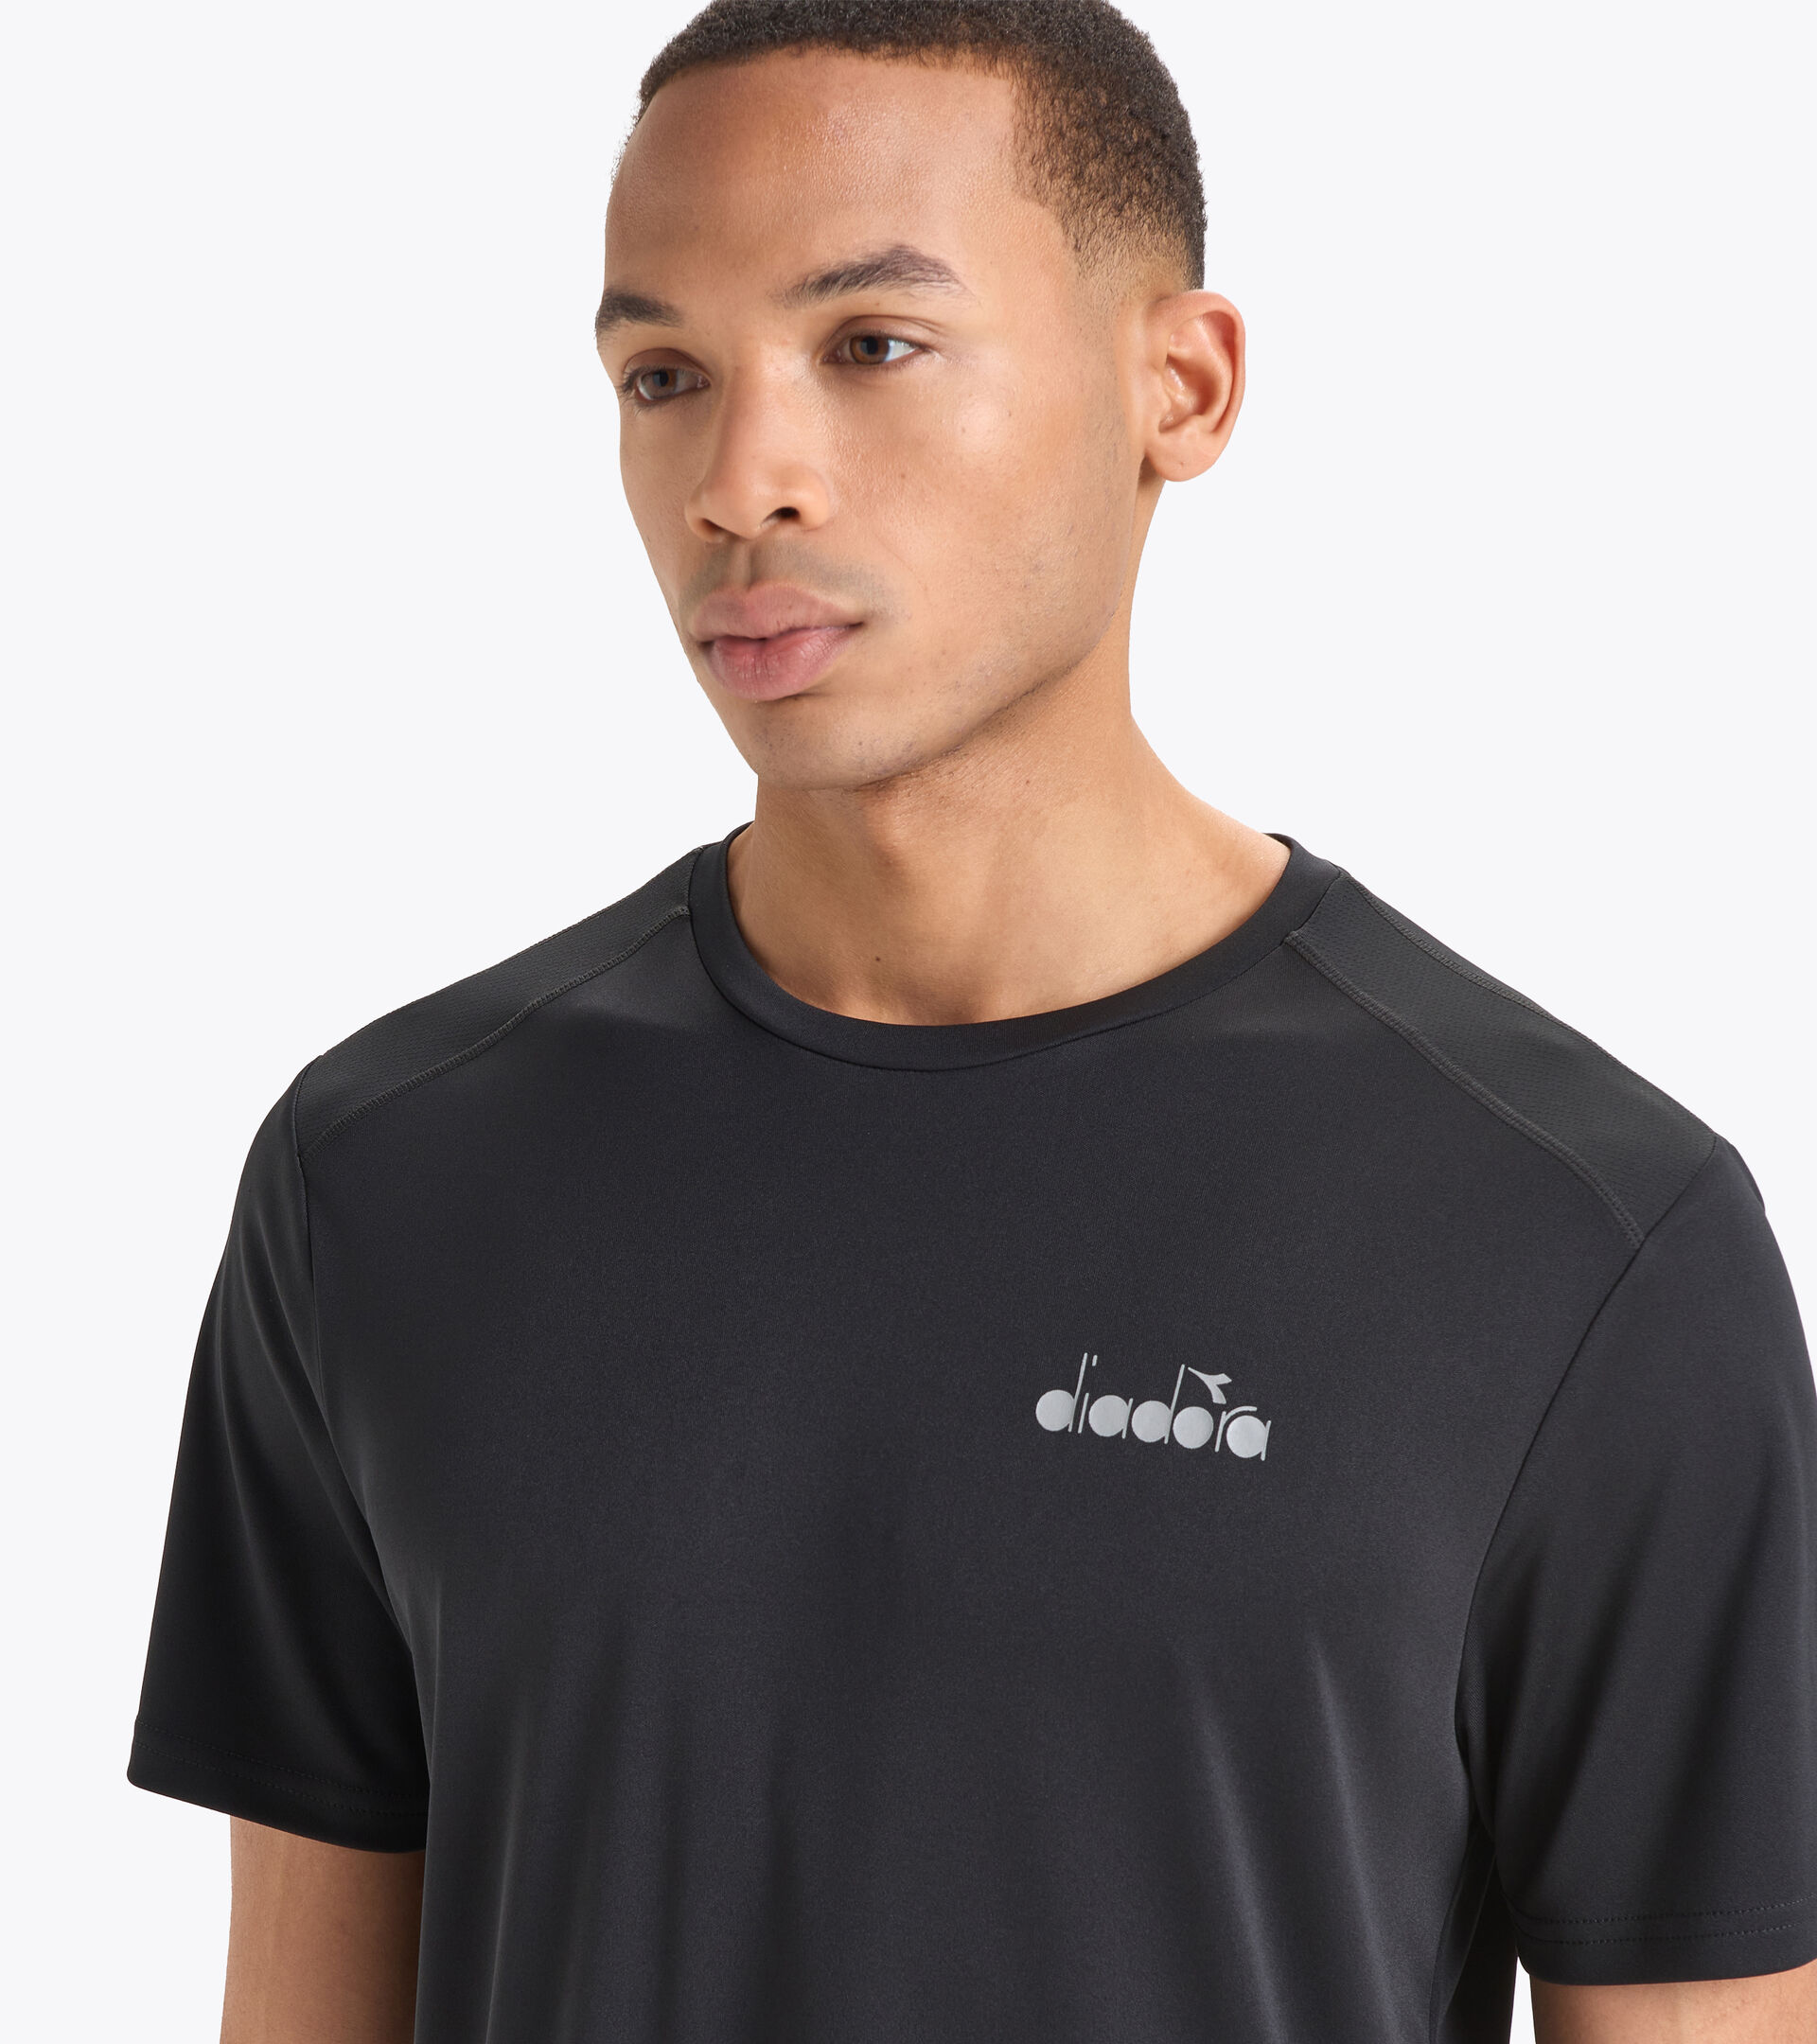 Camiseta para correr - Hombre SS T-SHIRT RUN NEGRO - Diadora